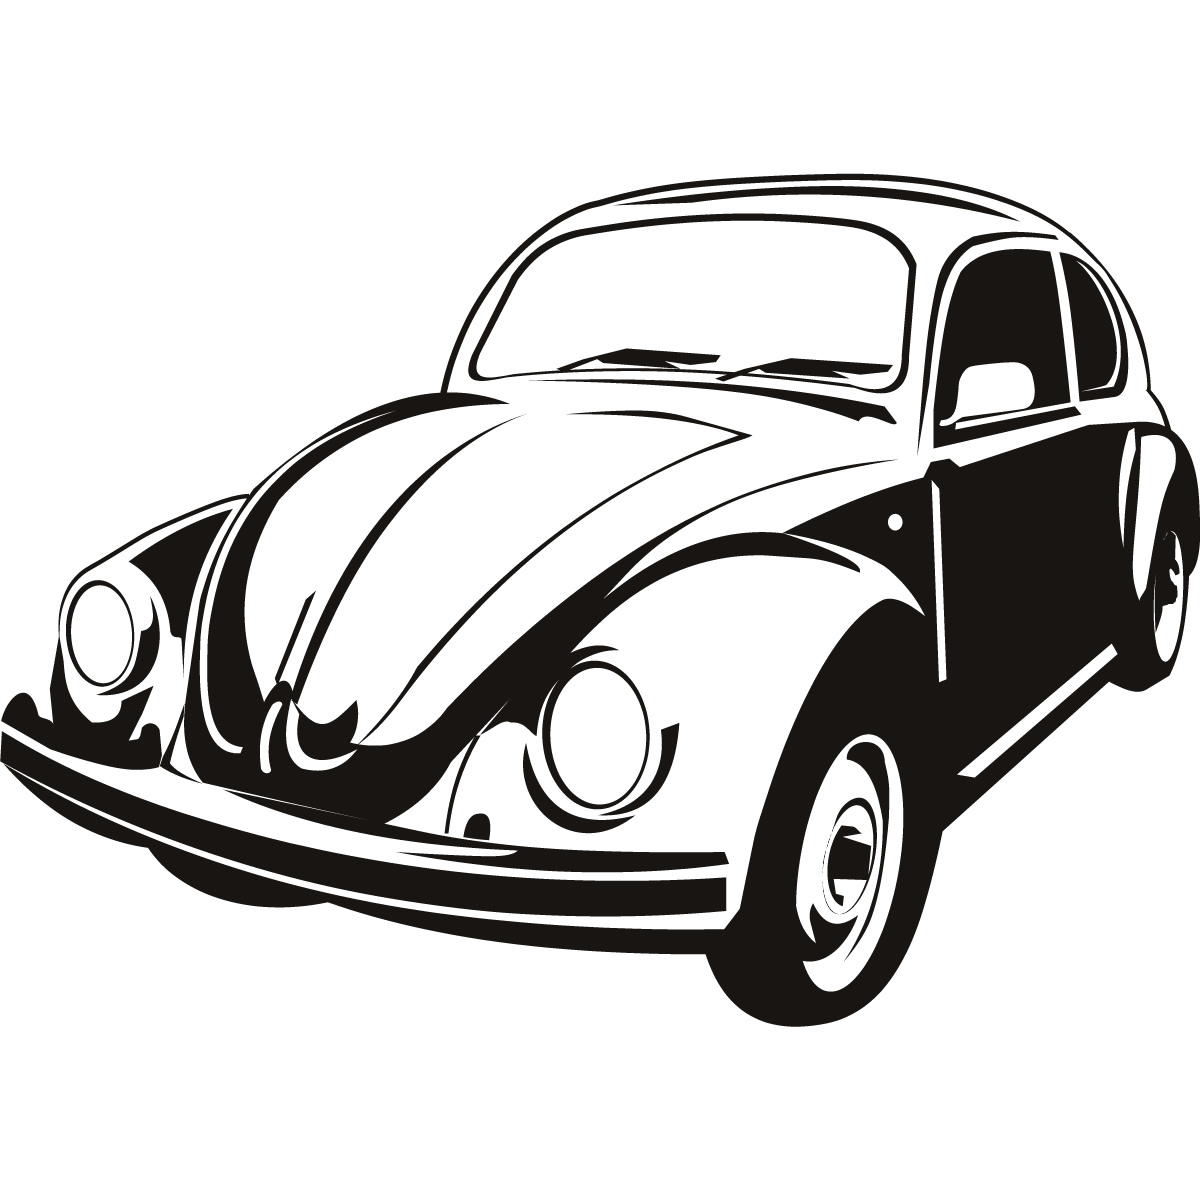 VW Beetle Cars Transport Wall Art Sticker Wall Decal Transfers ...